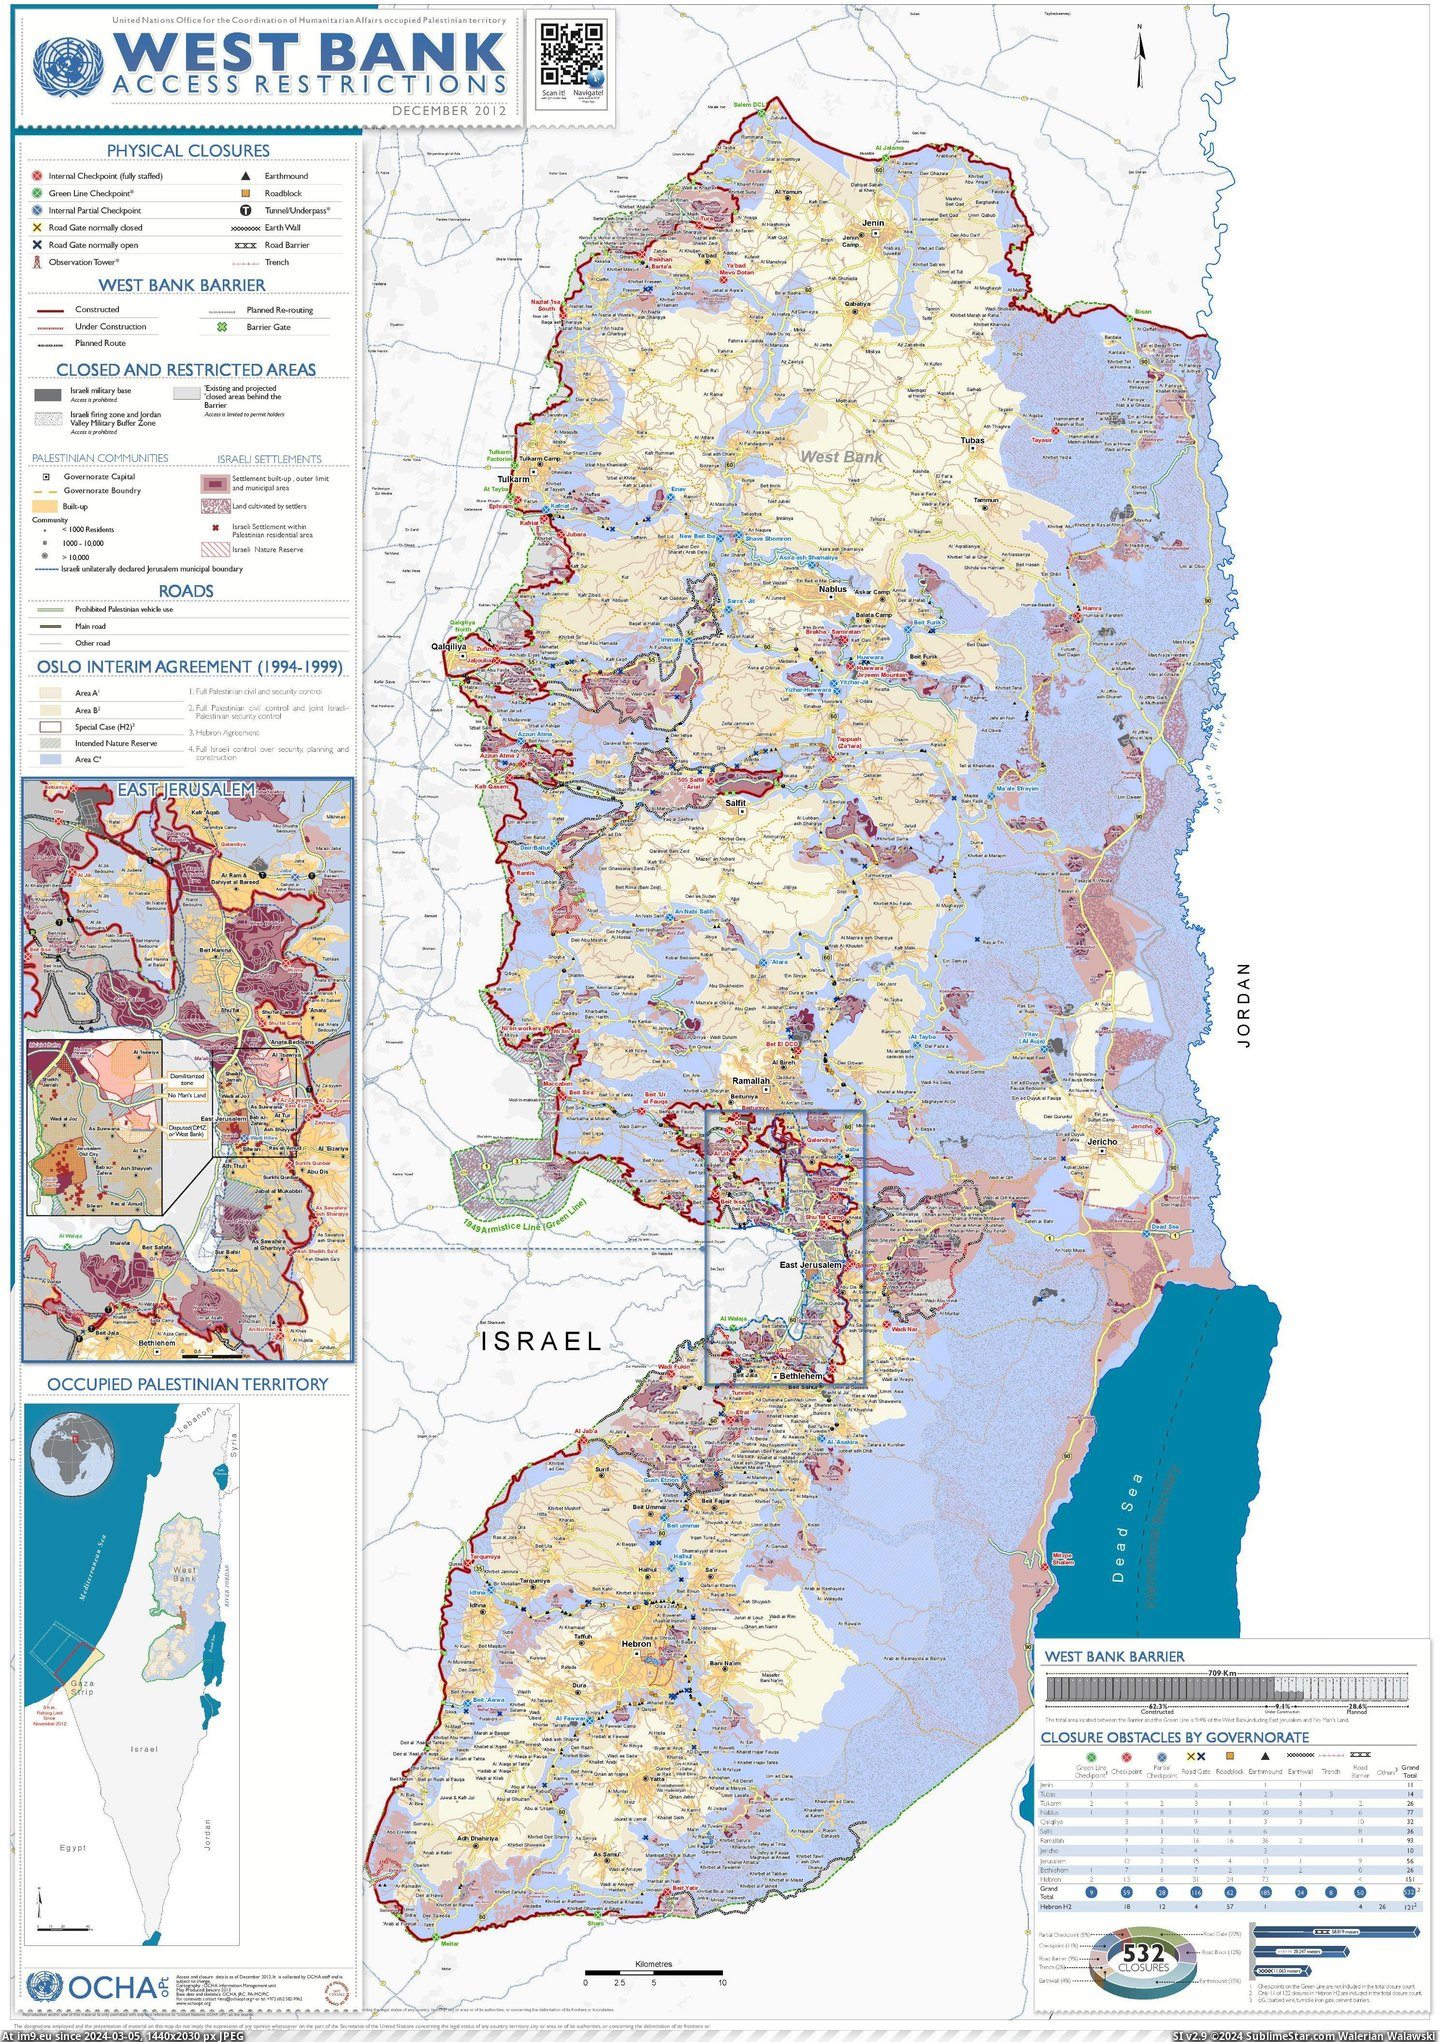 #West #Bank #Restrictions #Access [Mapporn] West Bank Access Restrictions (December 2012) [4967x7022] Pic. (Bild von album My r/MAPS favs))